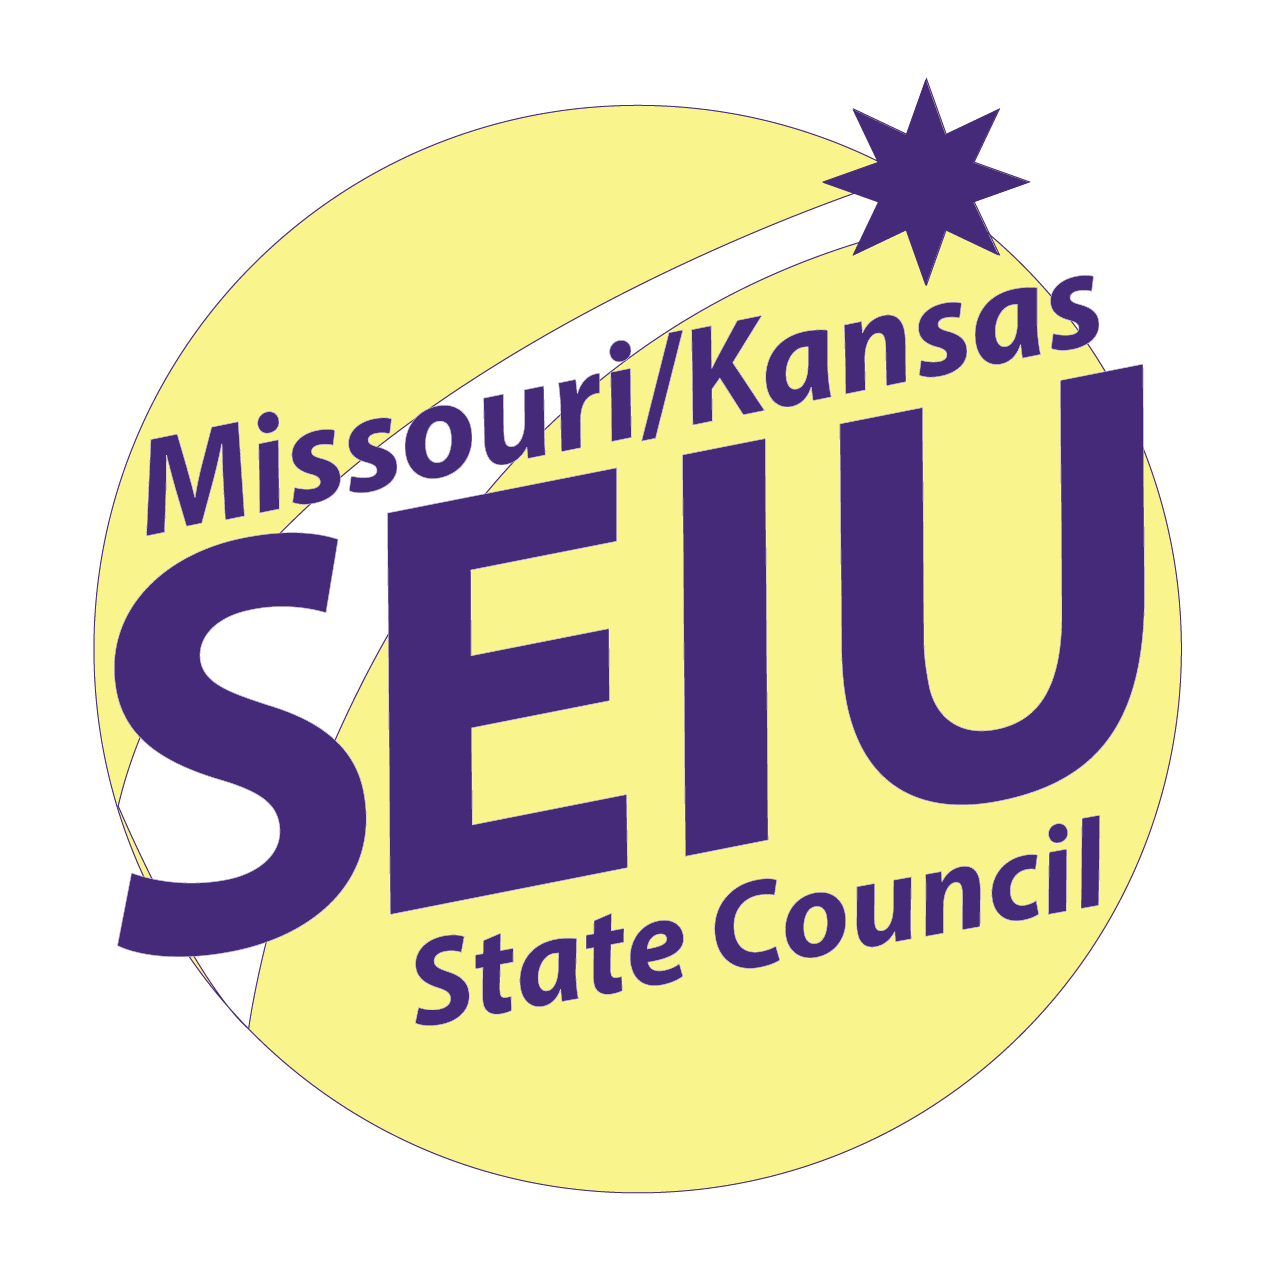 SEIU Missouri/Kansas State Council Director